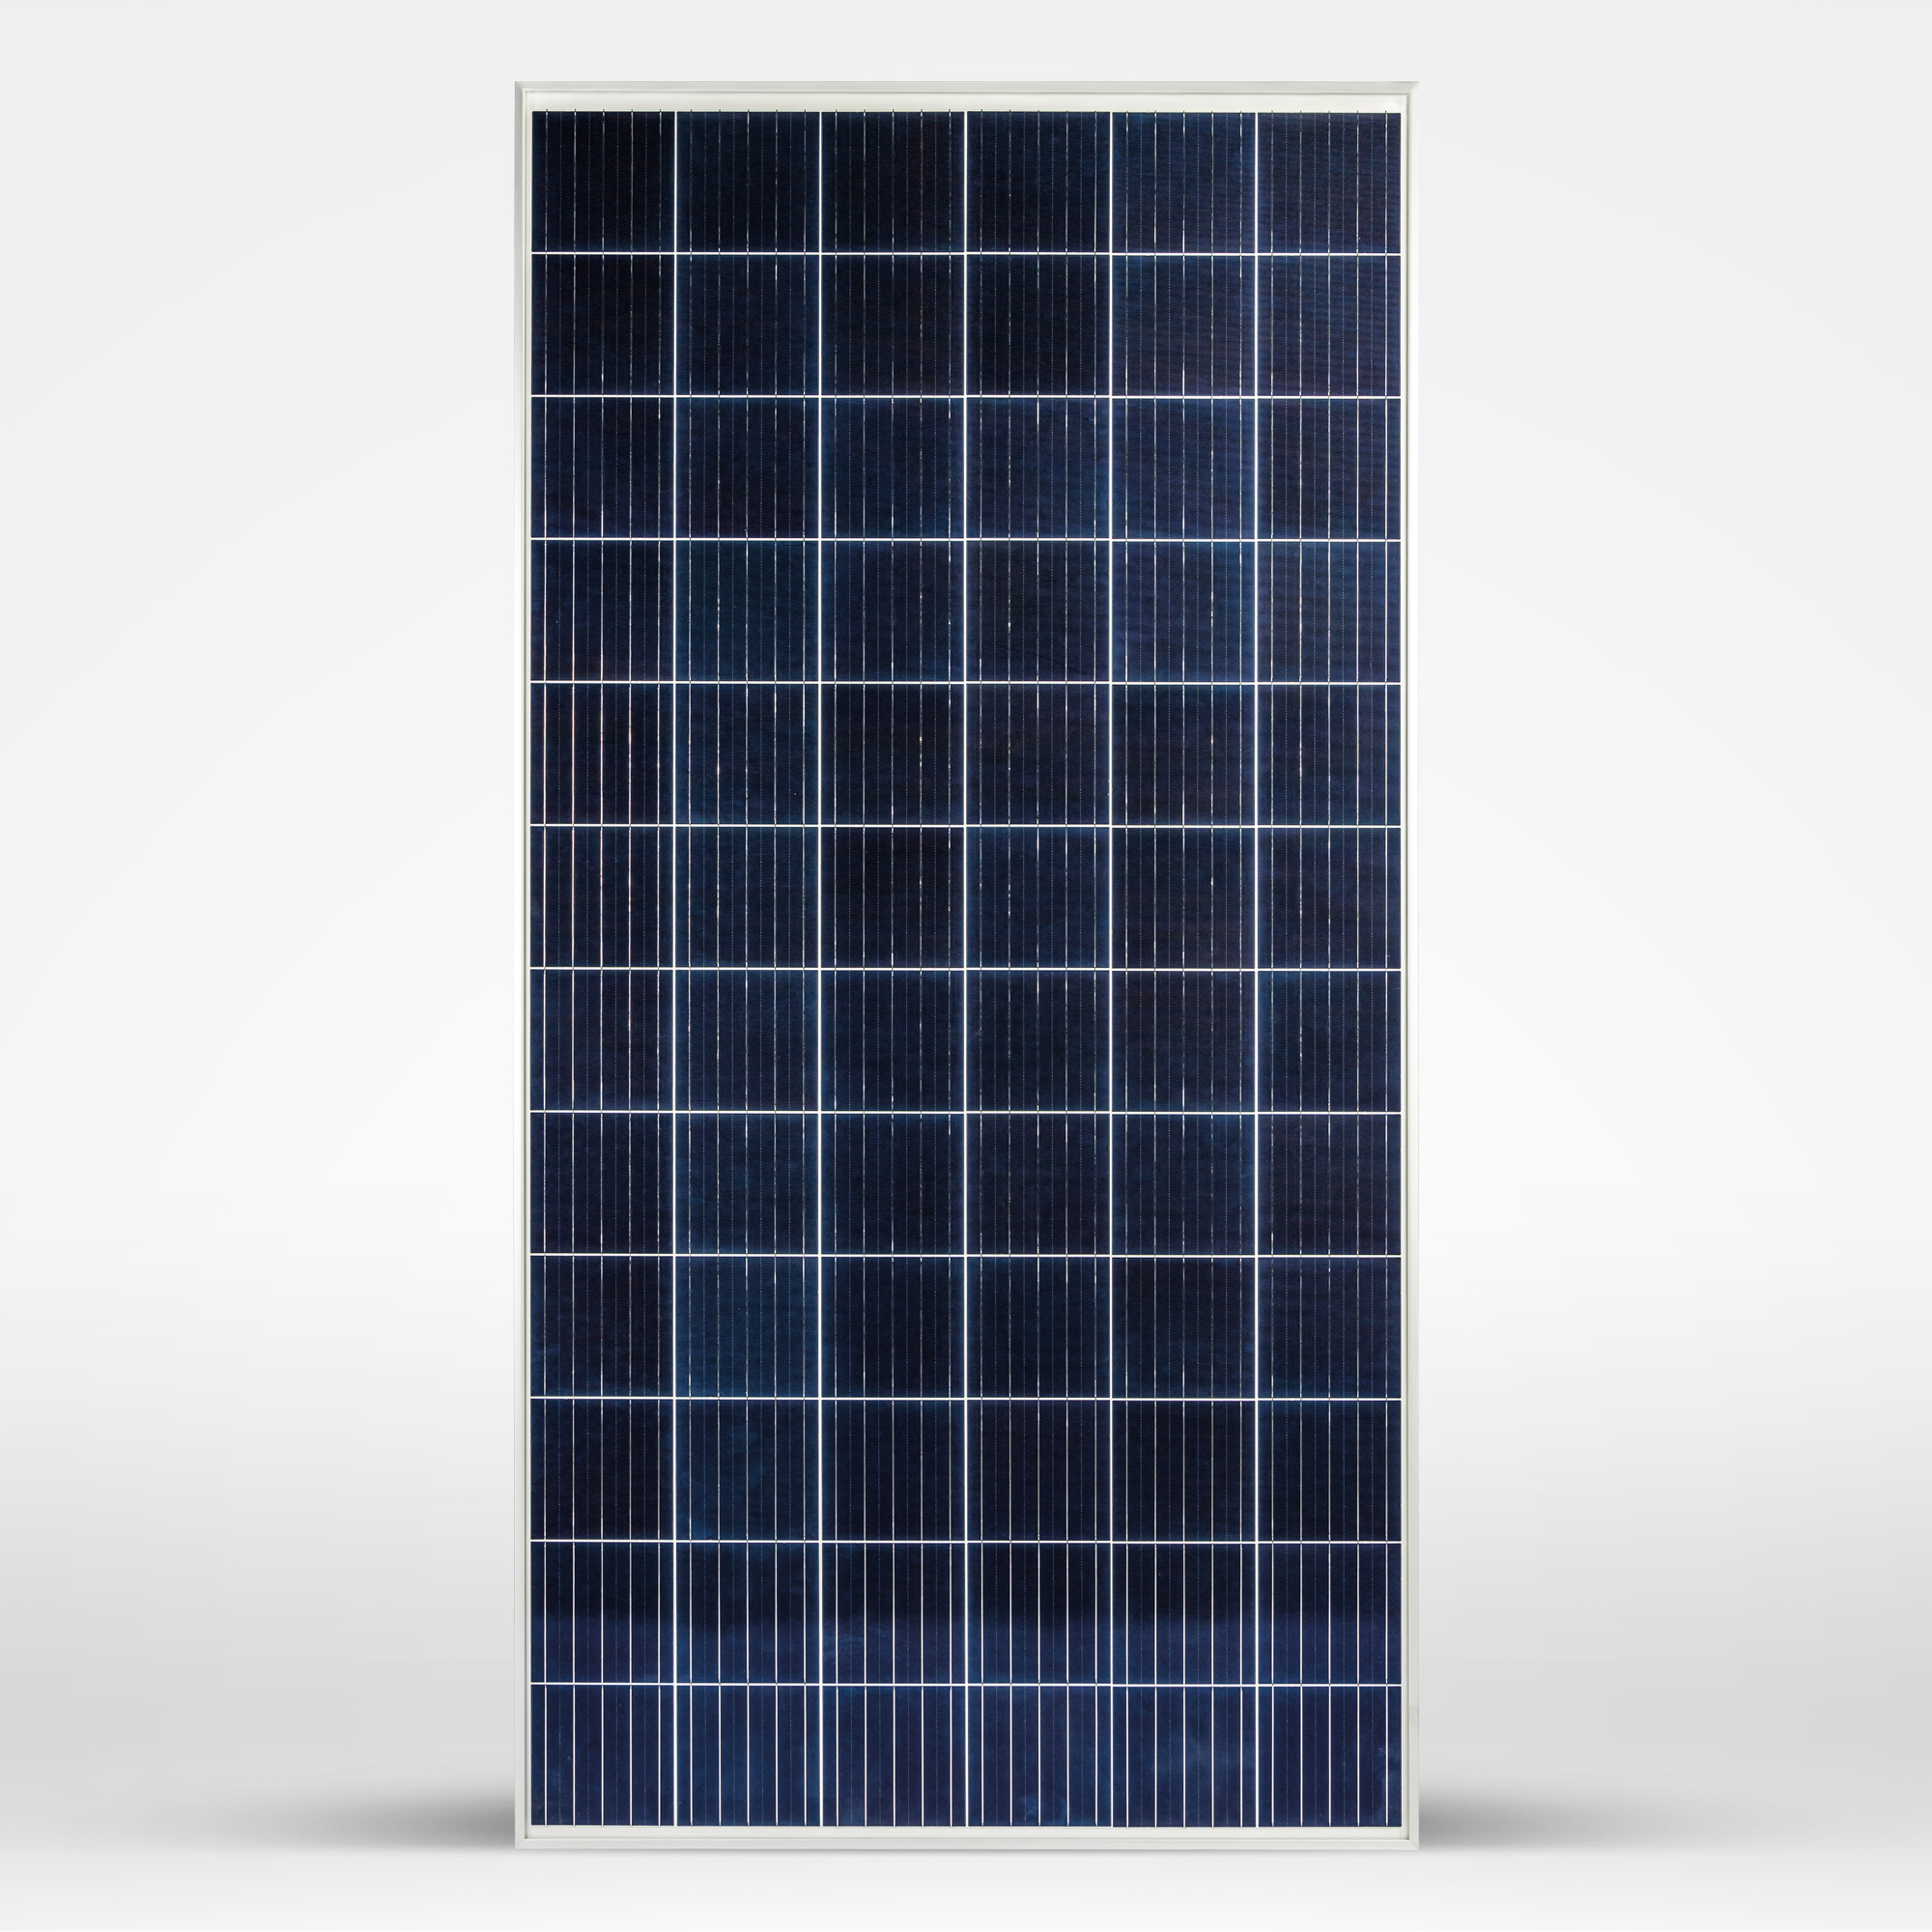 EWS-325P-72   Panneau solaire polycristallin 24V 325W